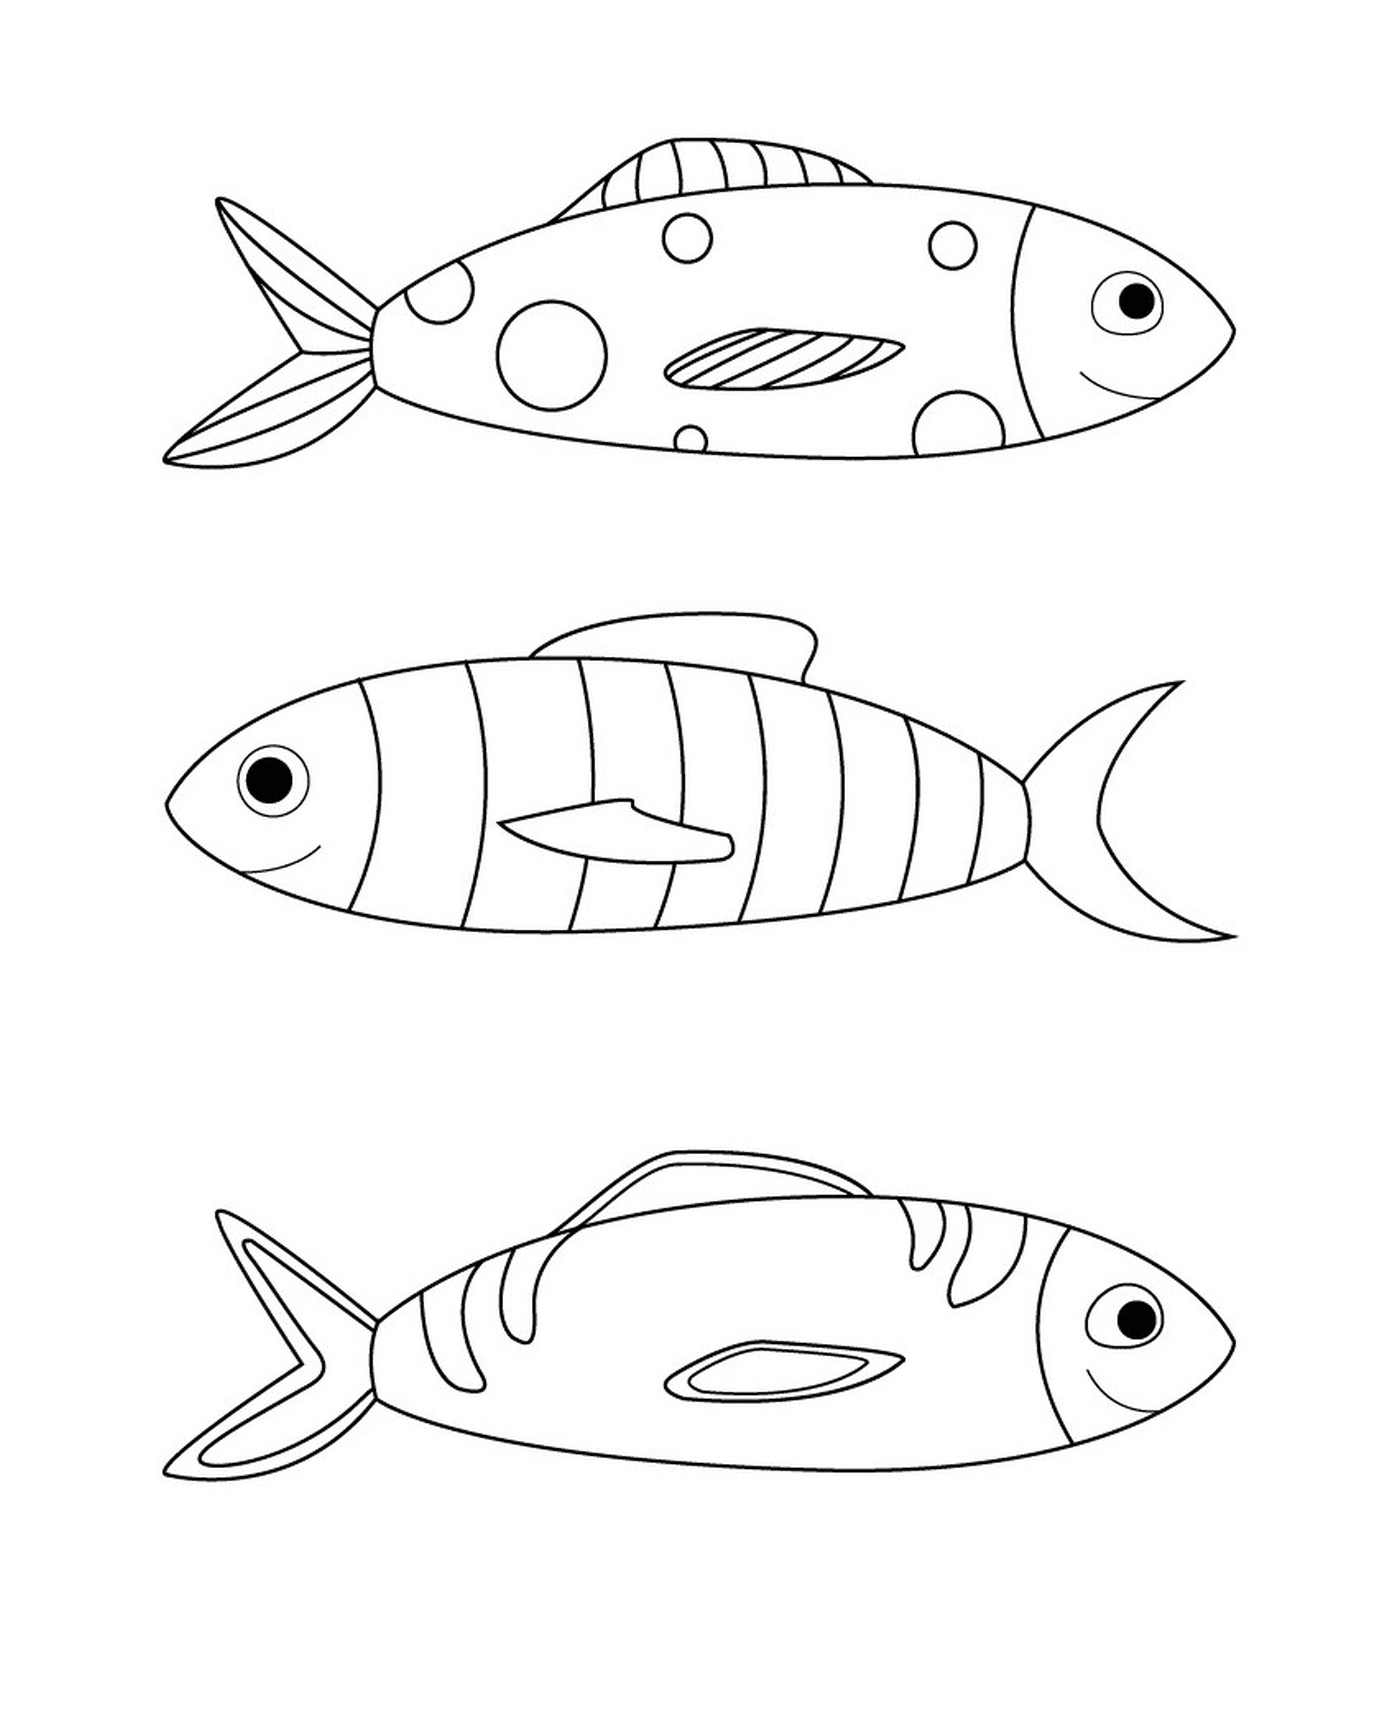  一组三条鱼 